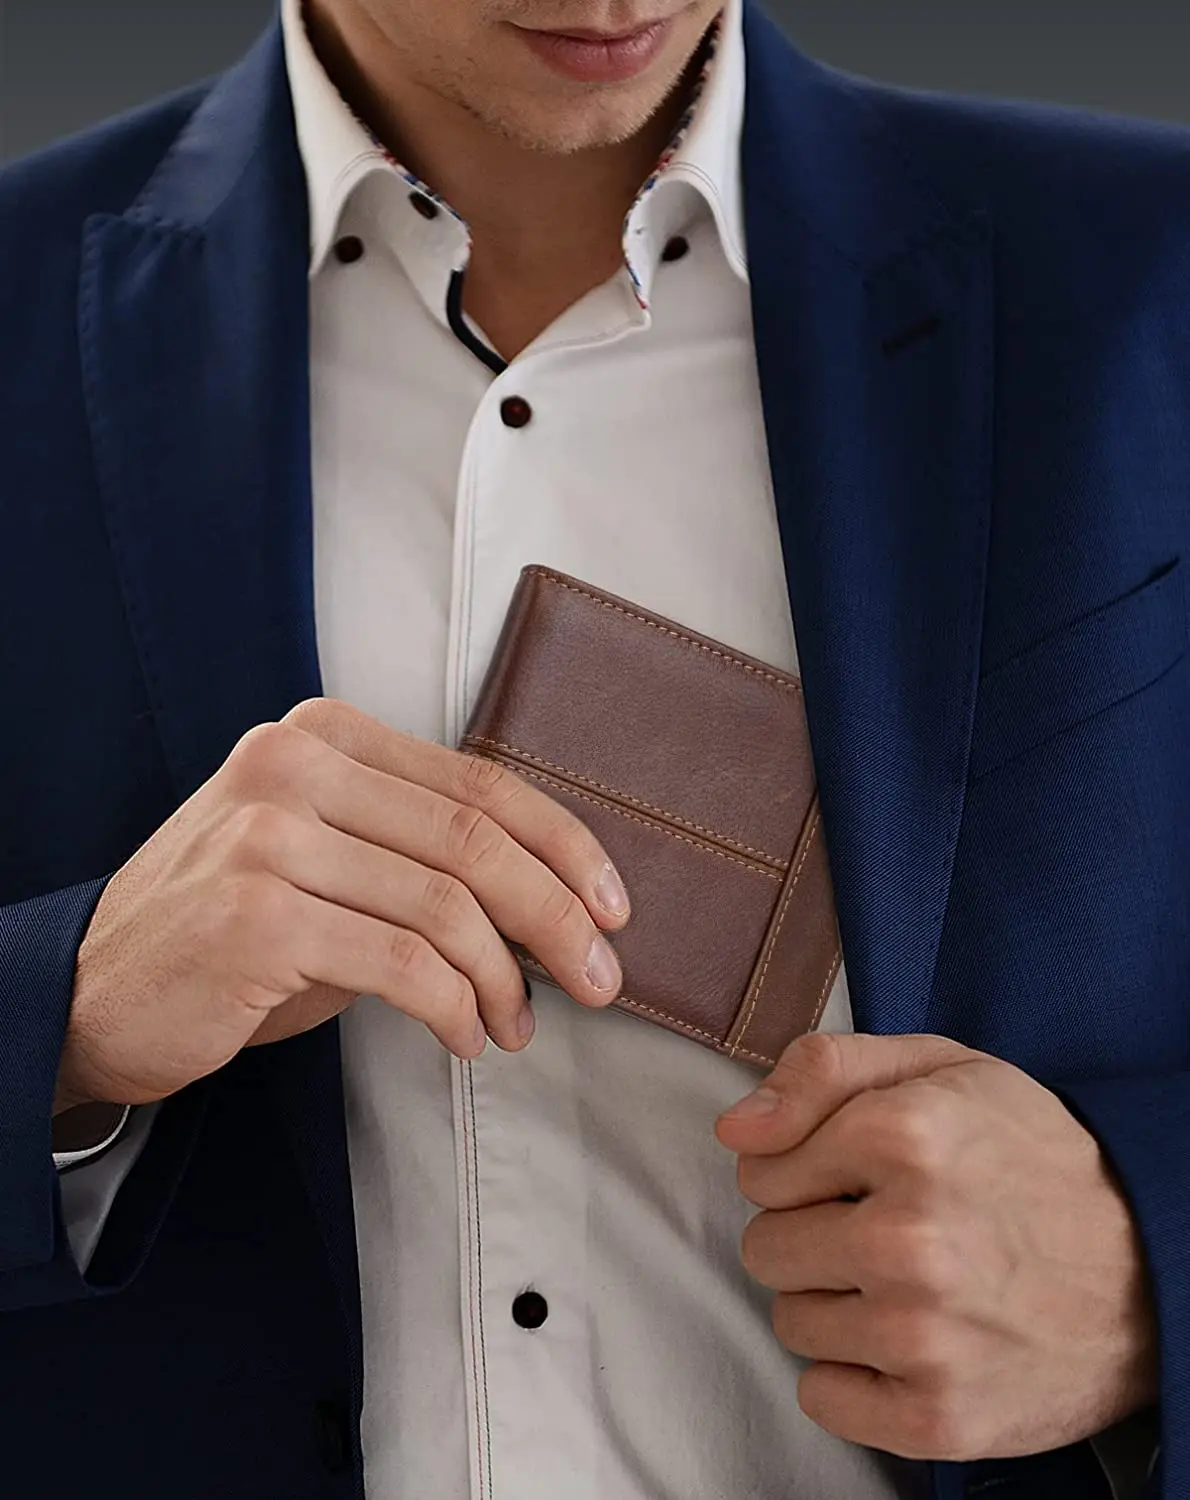 Mens הארנק RFID עור אמיתי Bifold ארנקים לגברים, מזהה חלון 16 מחזיקי כרטיס אשראי Carteira Masculina Billetera גבר . ' - ' . 2